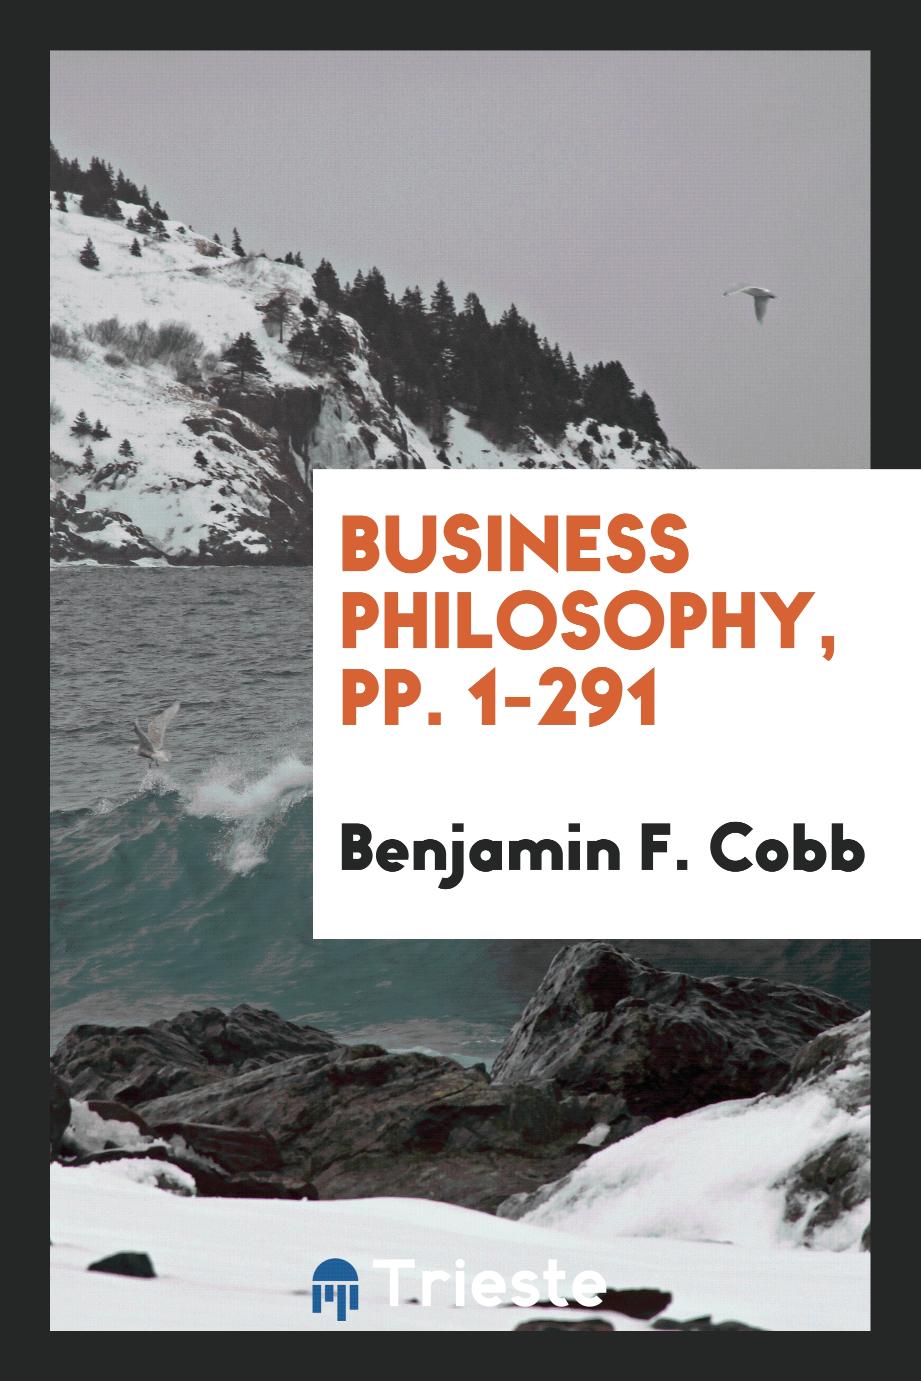 Business Philosophy, pp. 1-291